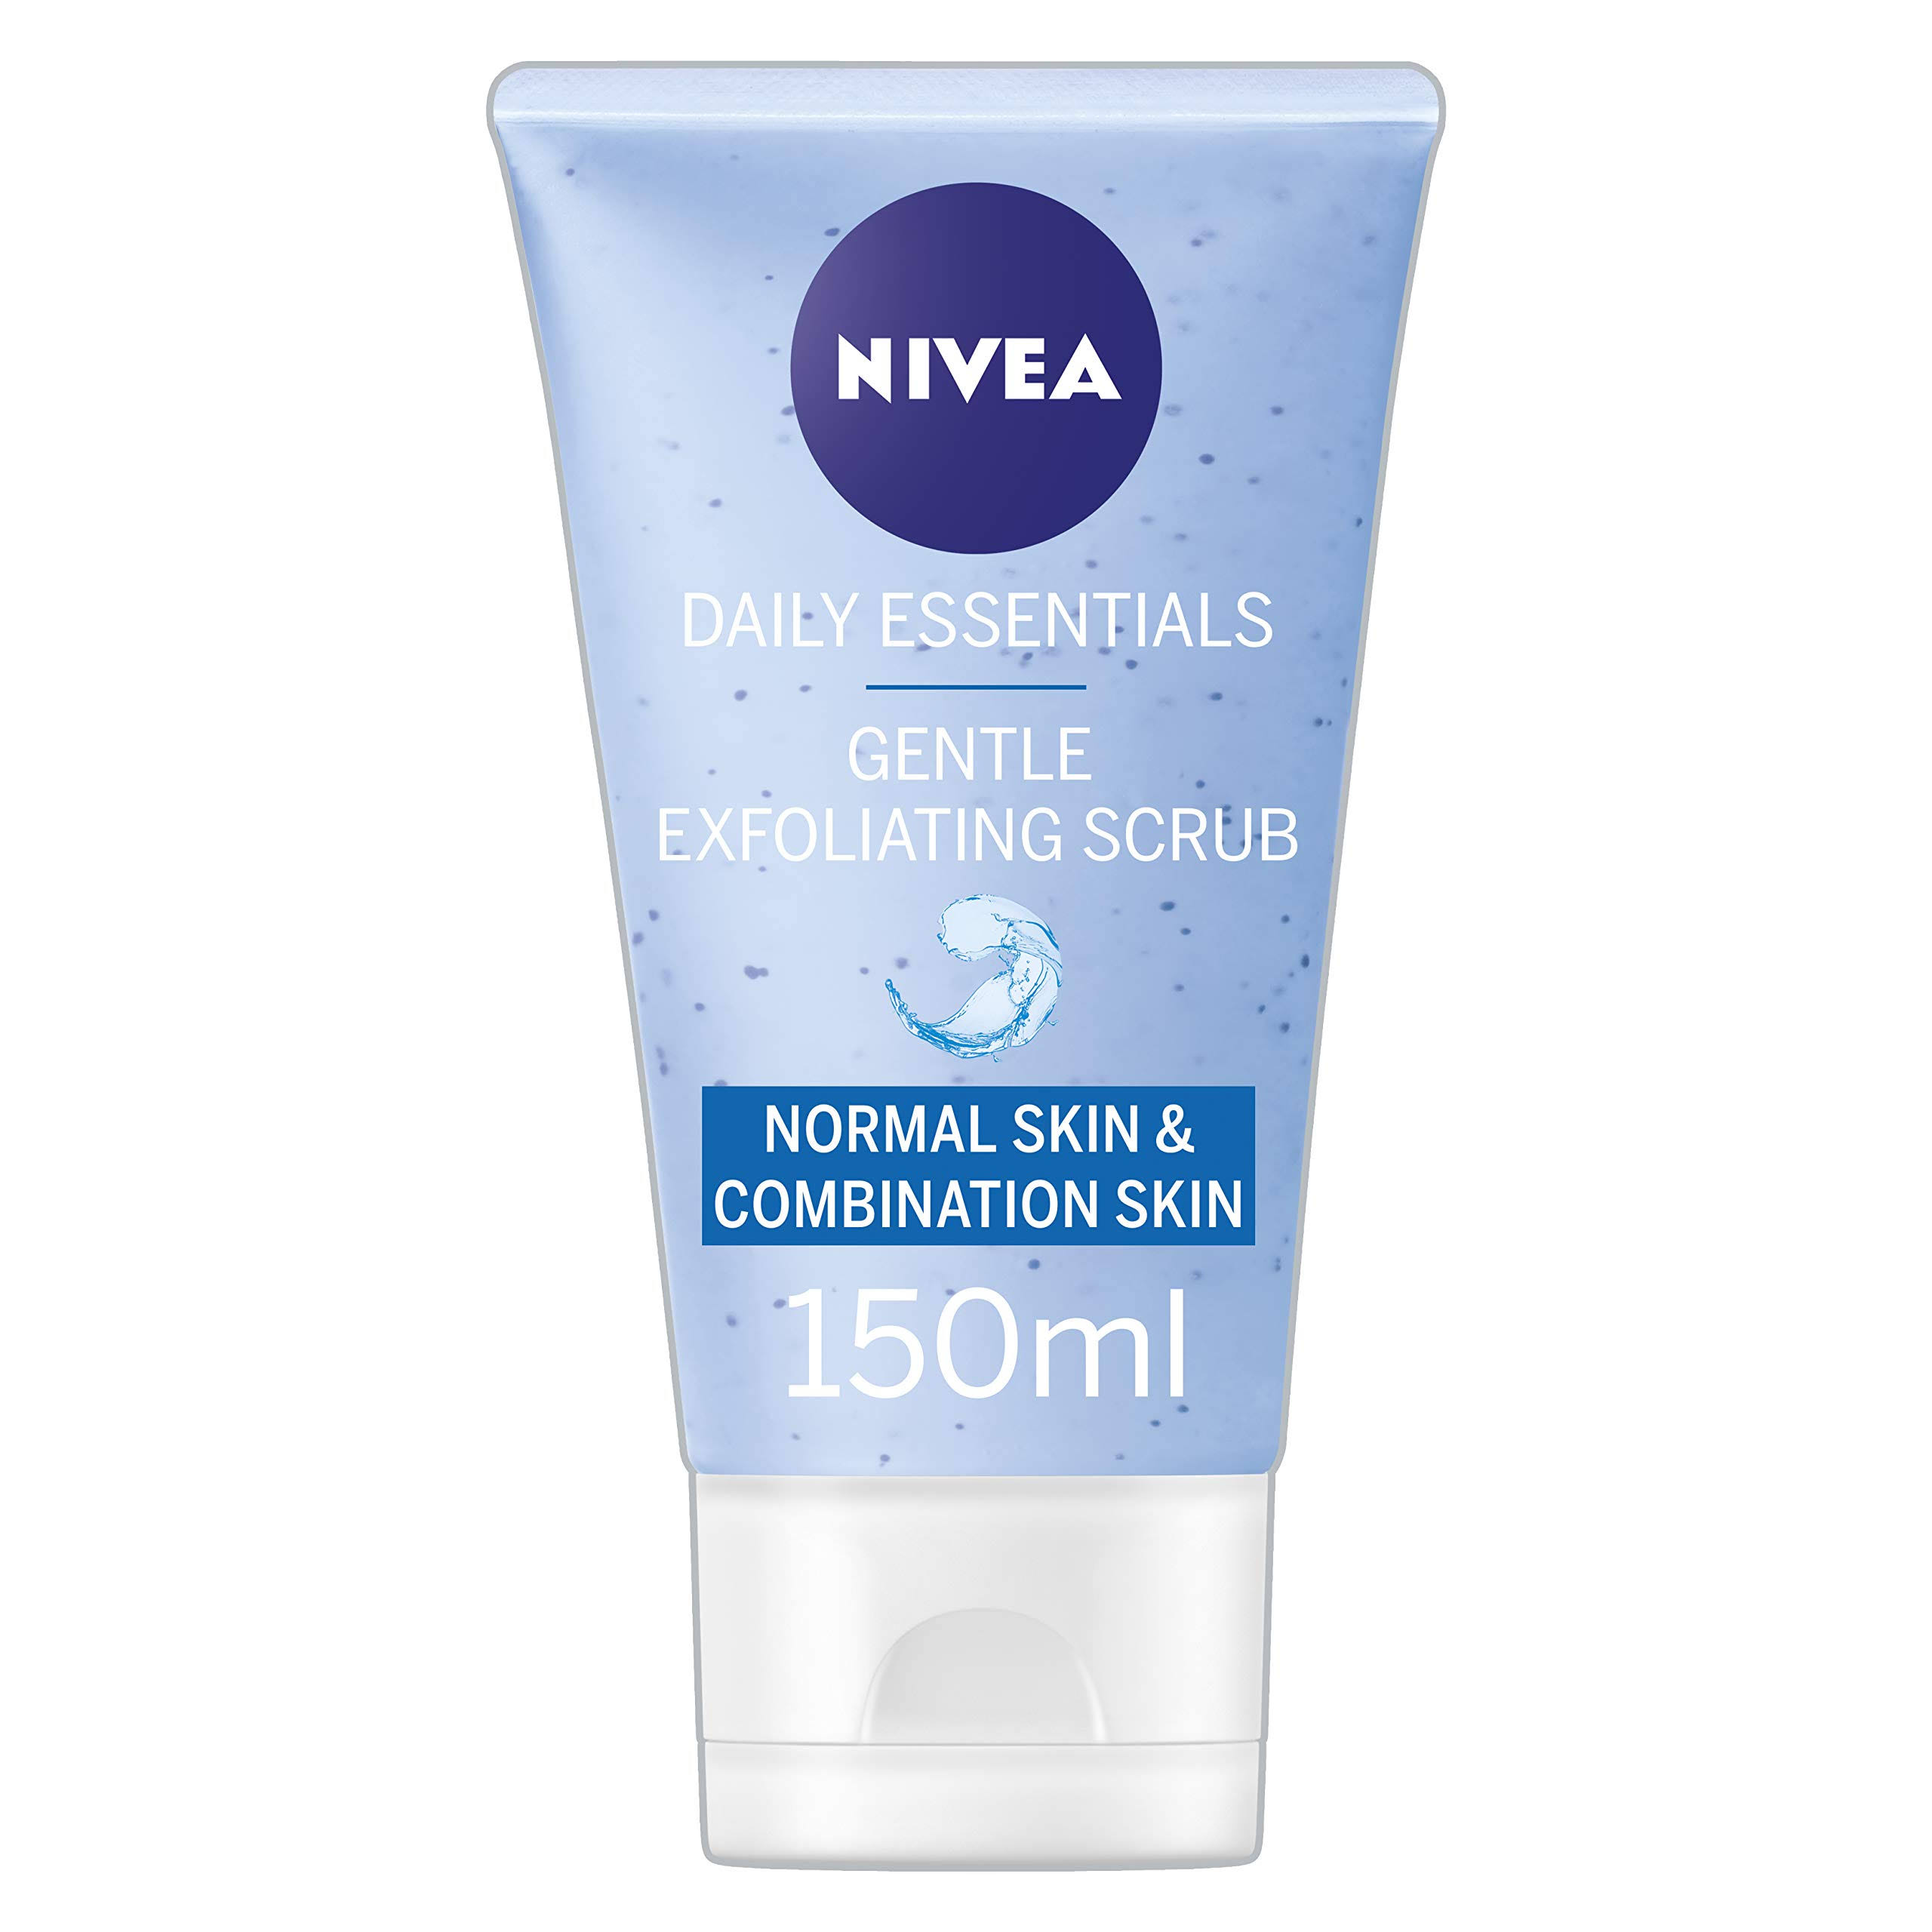 NIVEA Daily Essentials Gentle Exfoliating Scrub - 150ml